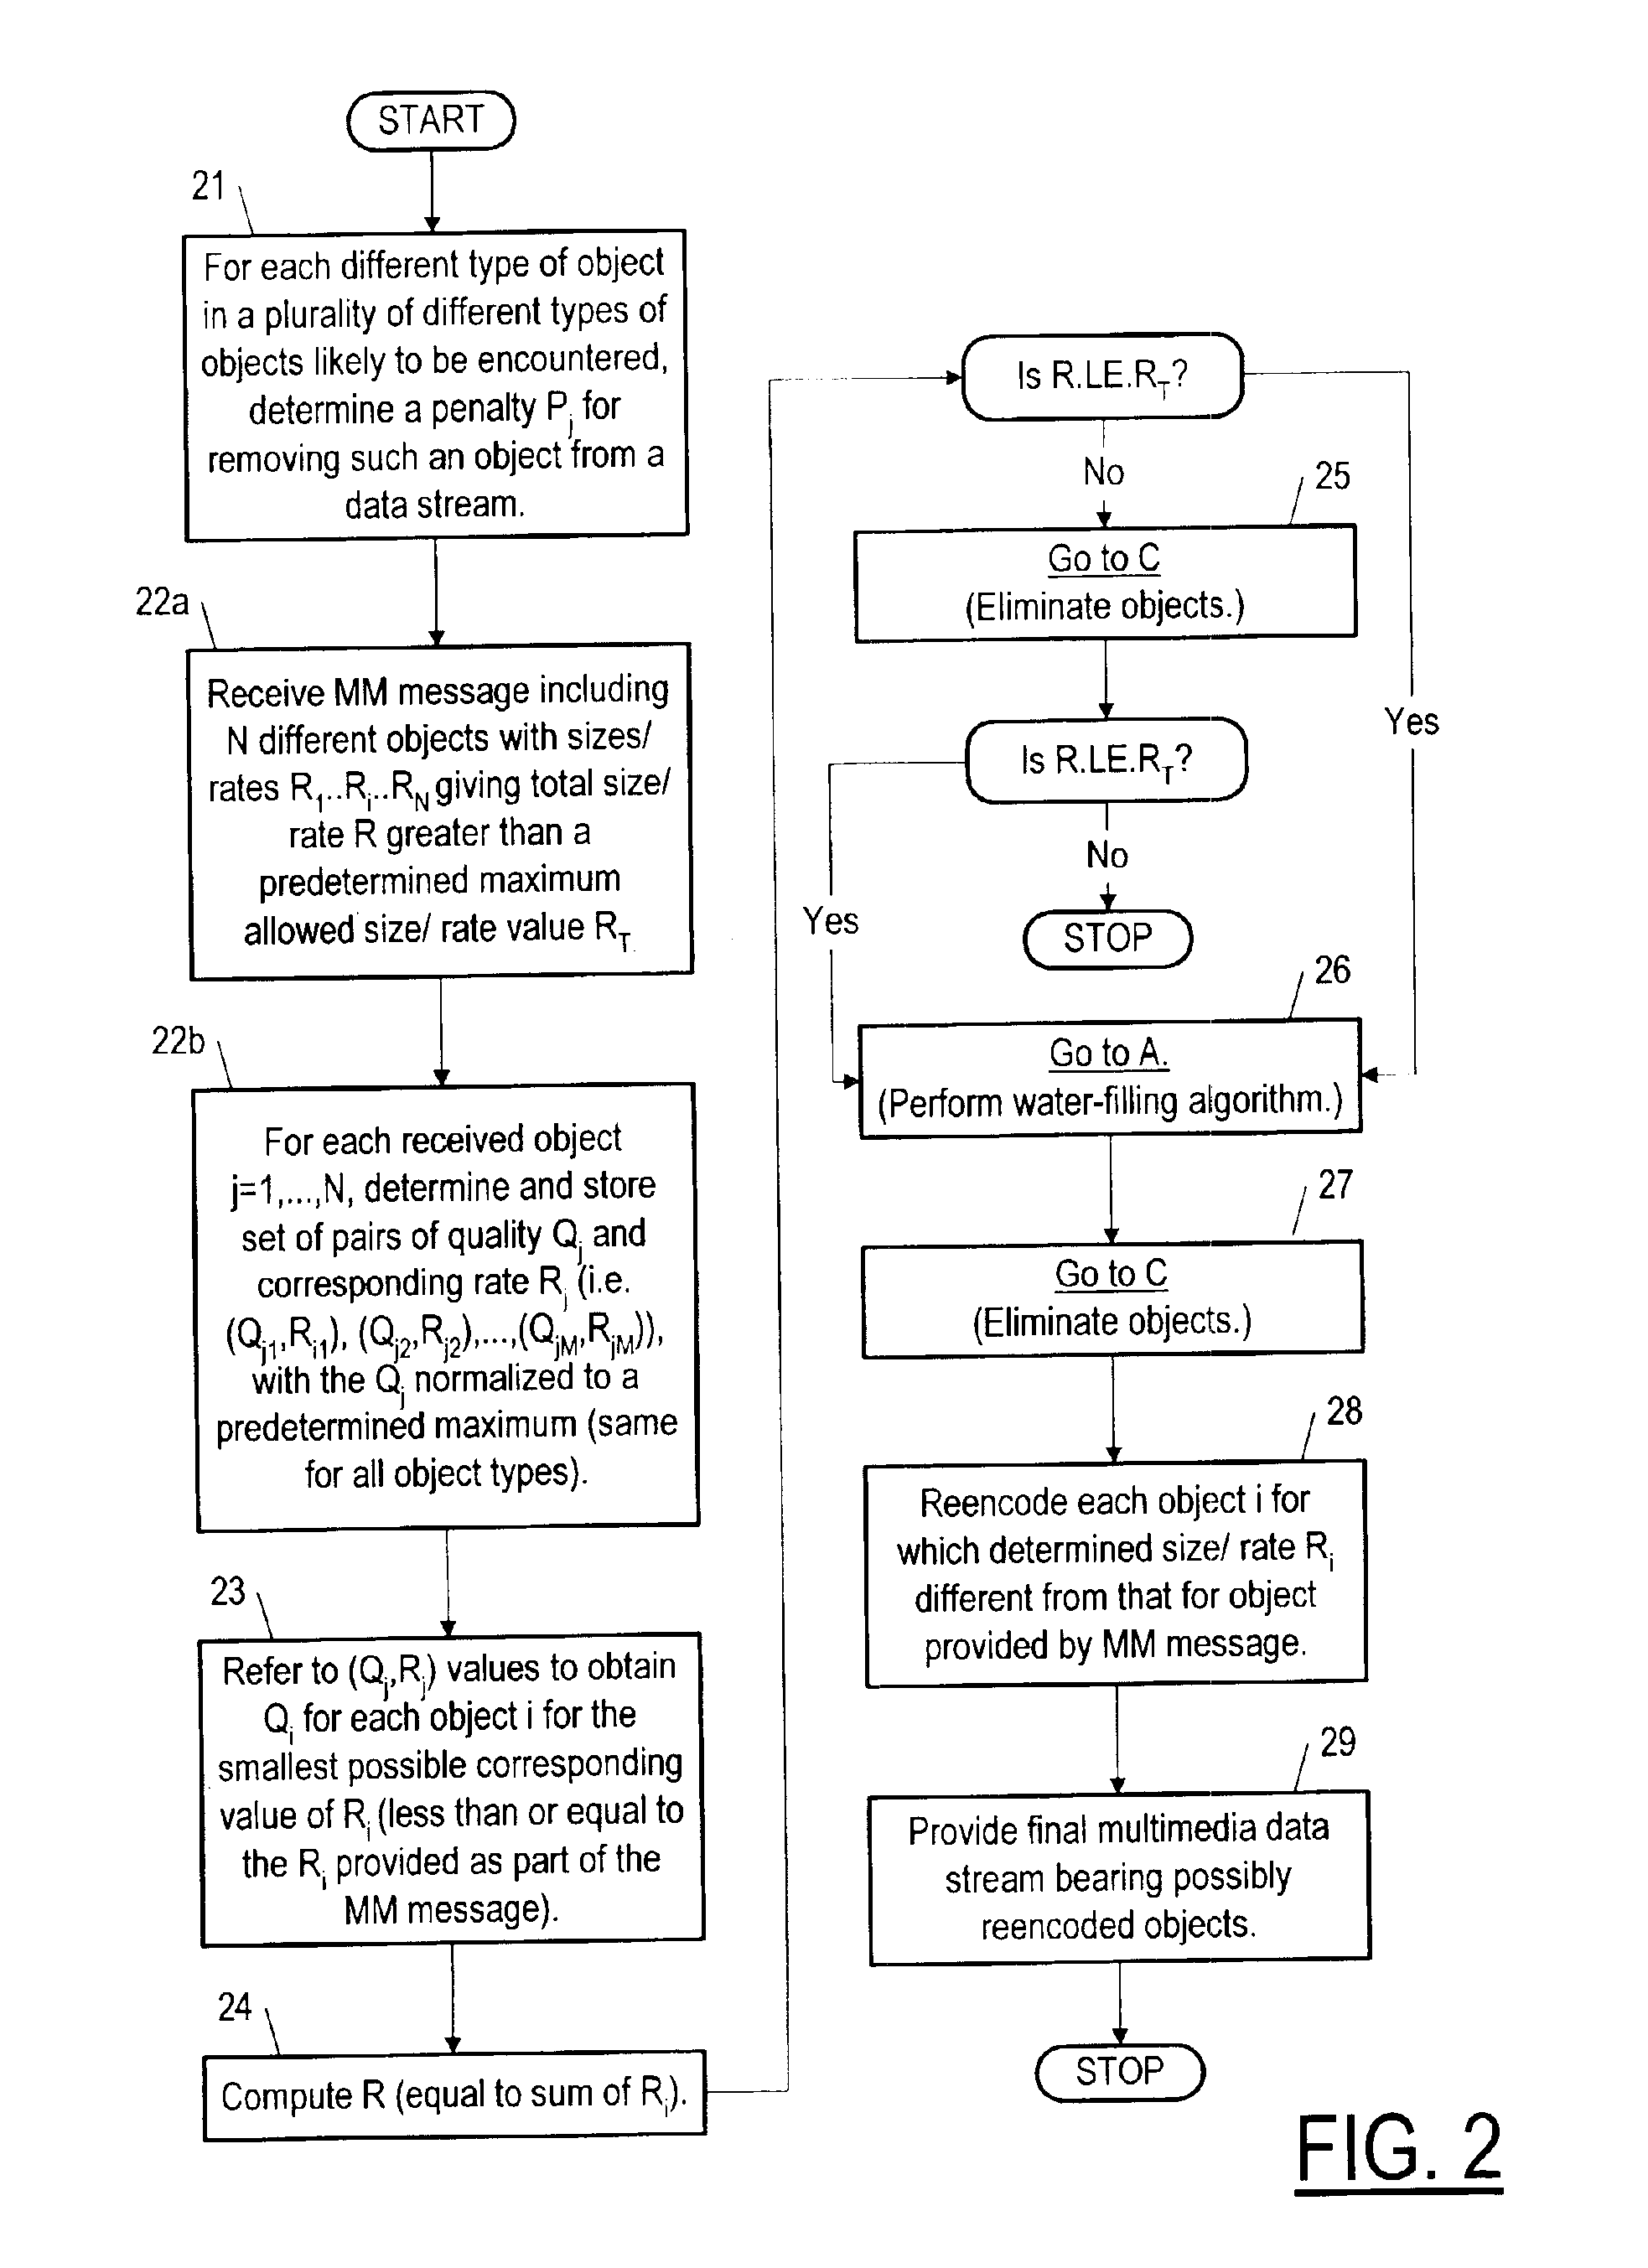 Method and apparatus for providing a multimedia data stream